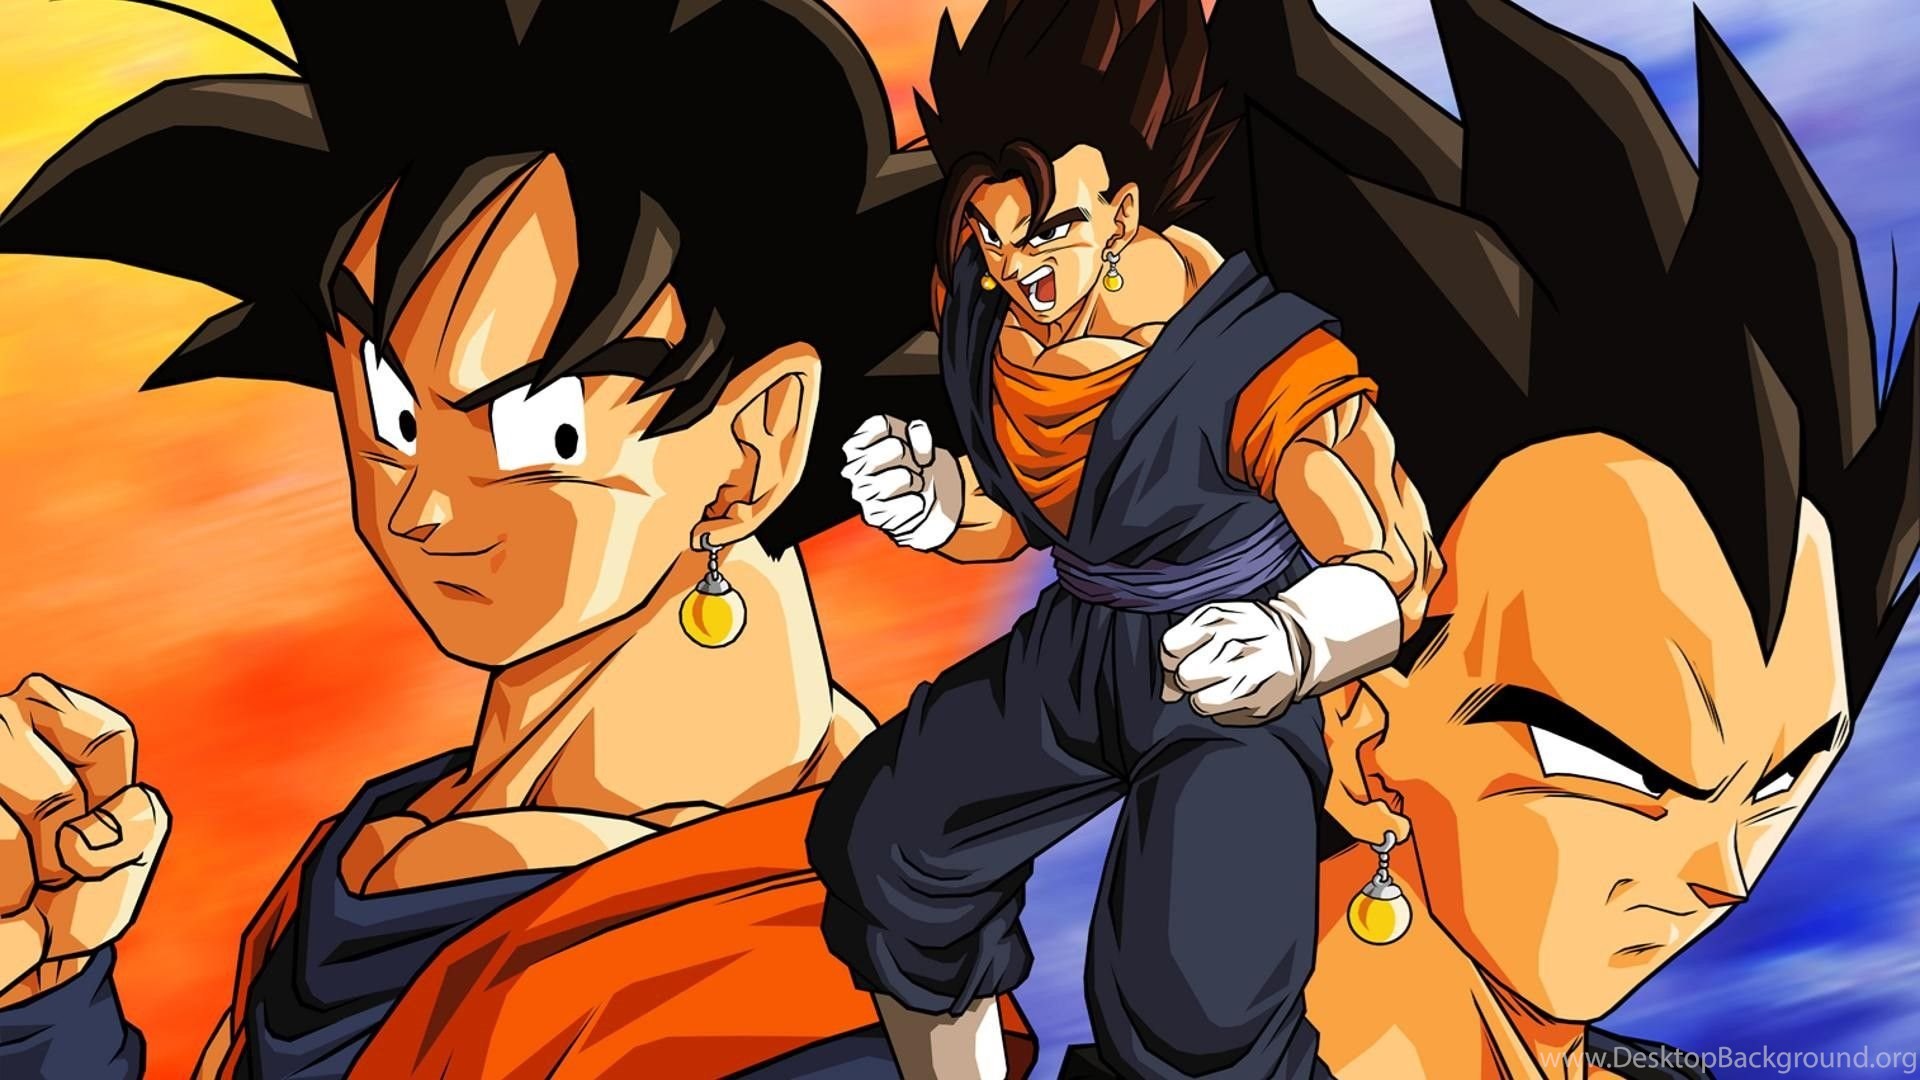 Goku And Vegeta Wallpaper, Goku And Vegeta Background, Goku And. Desktop Background